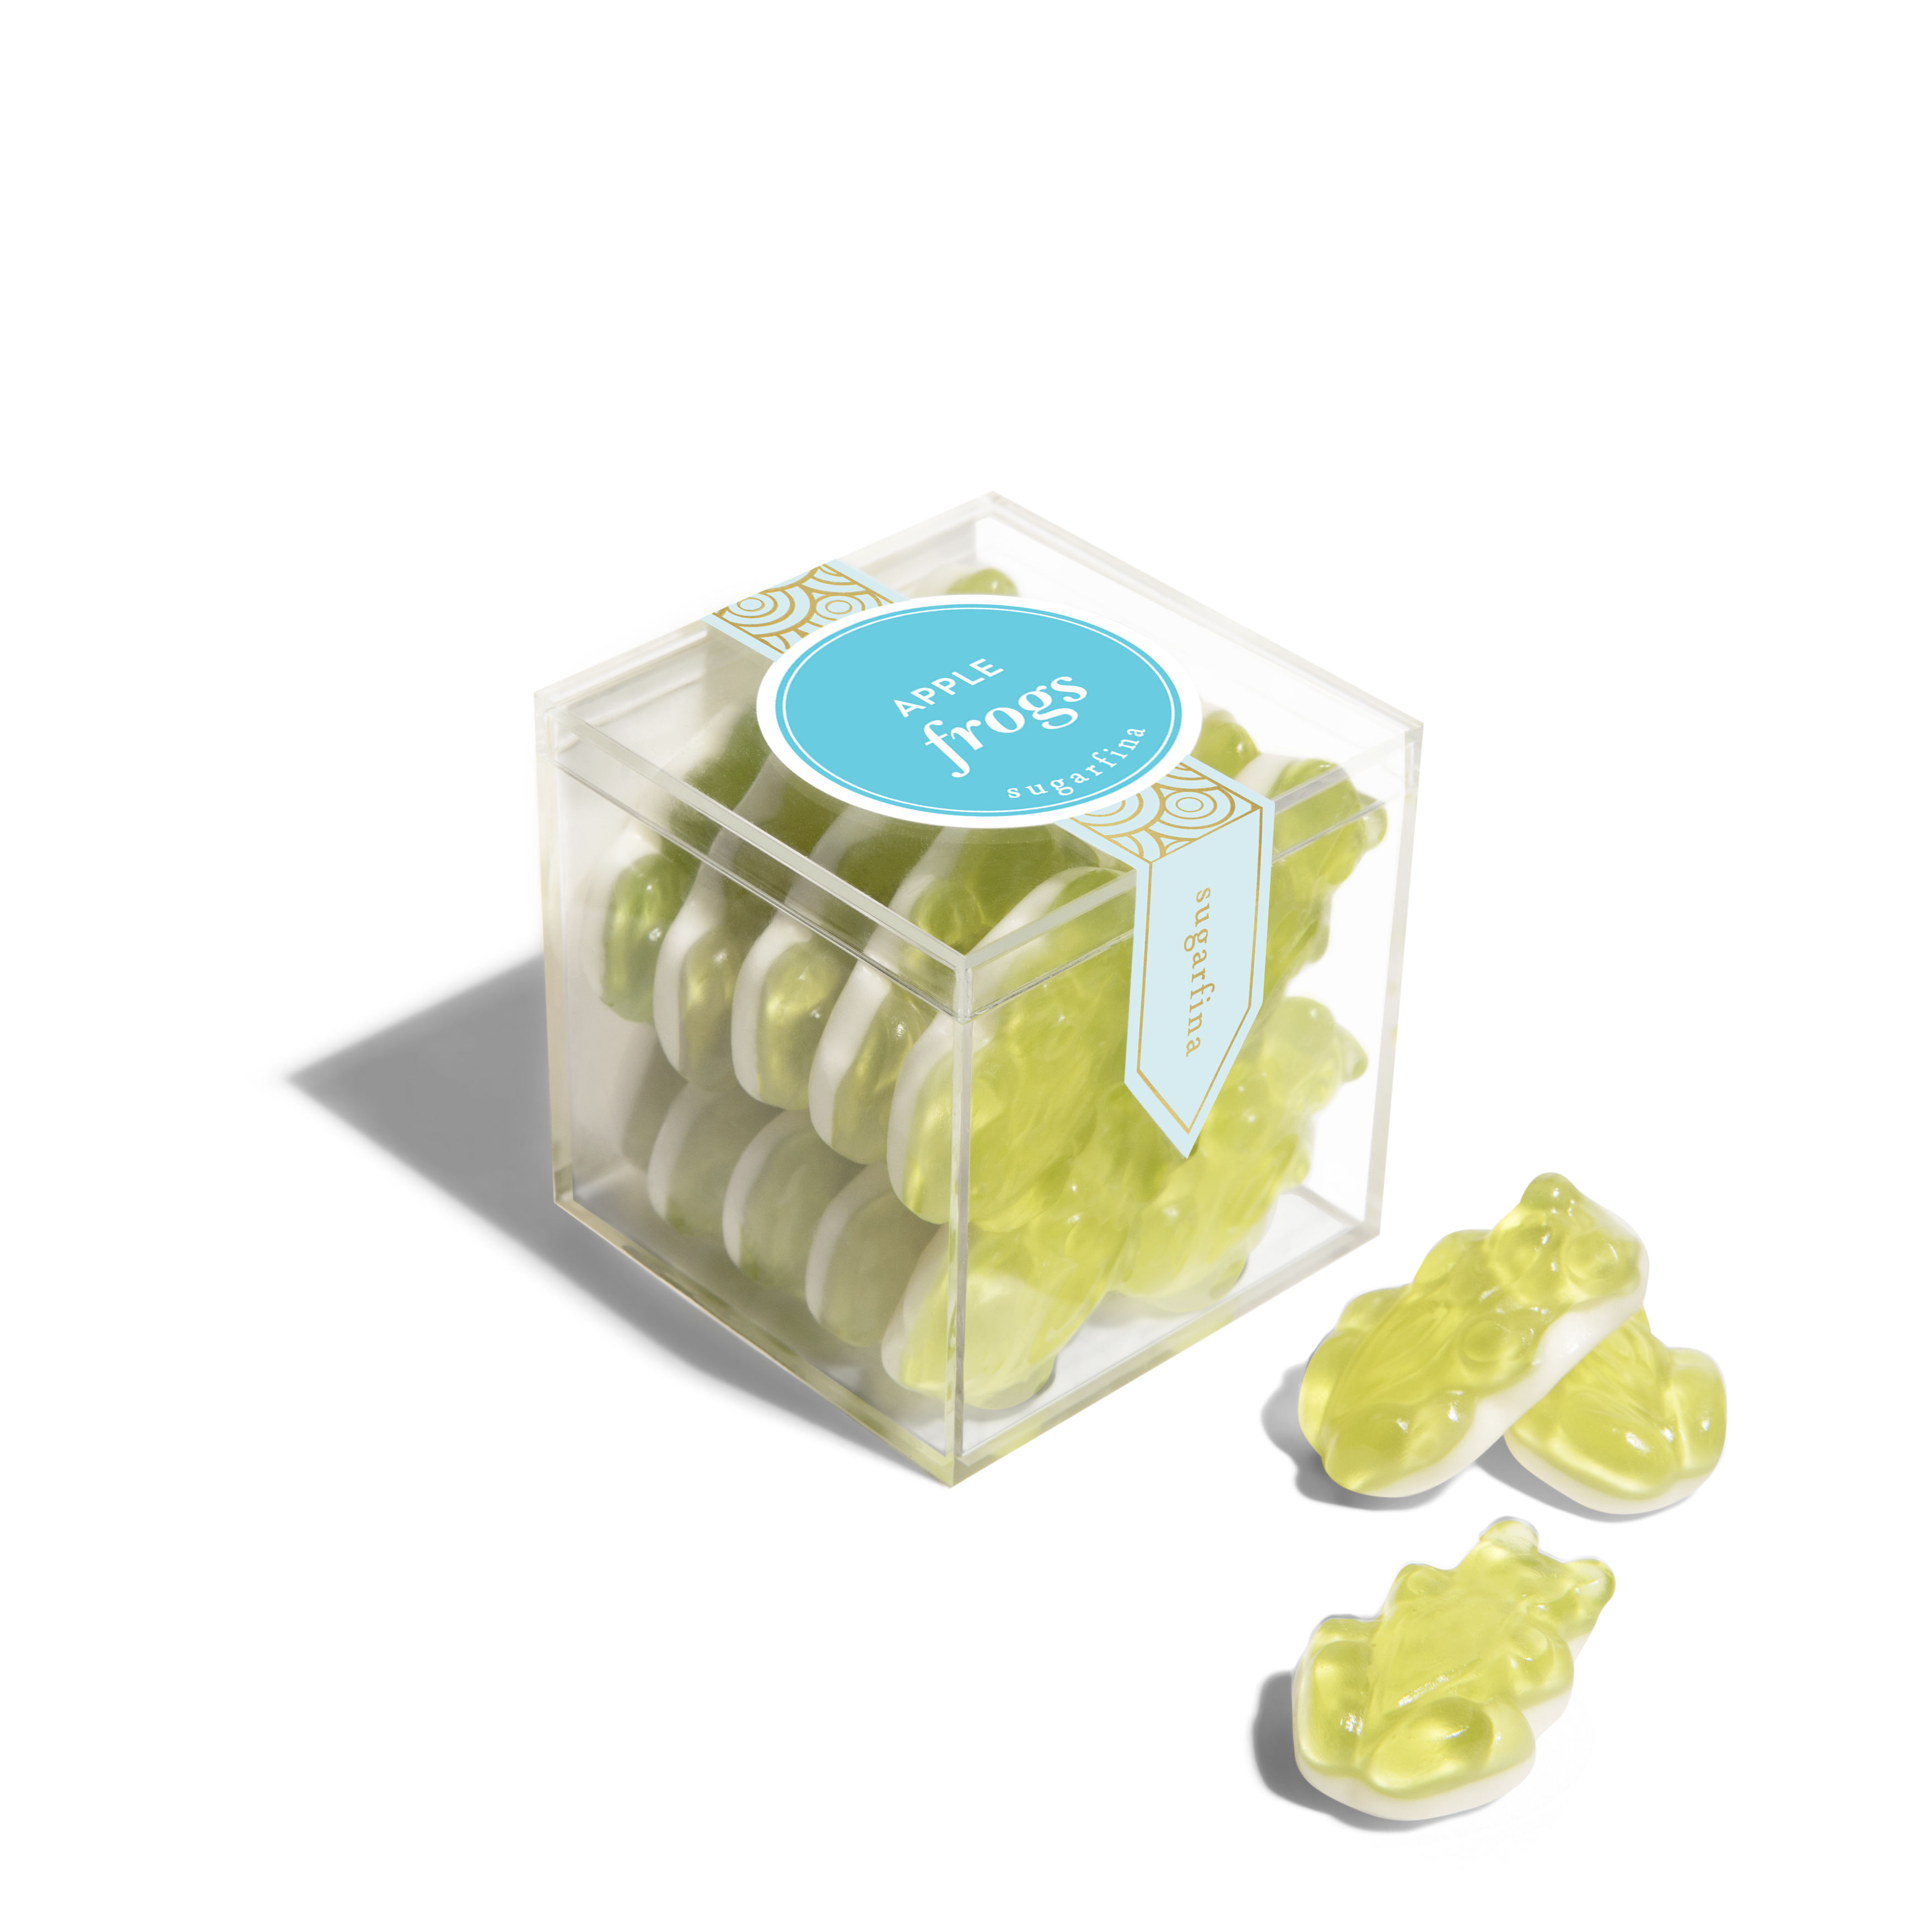 Apple Frogs - Green Apple Flavored Gummies | Sugarfina | A Luxury ...